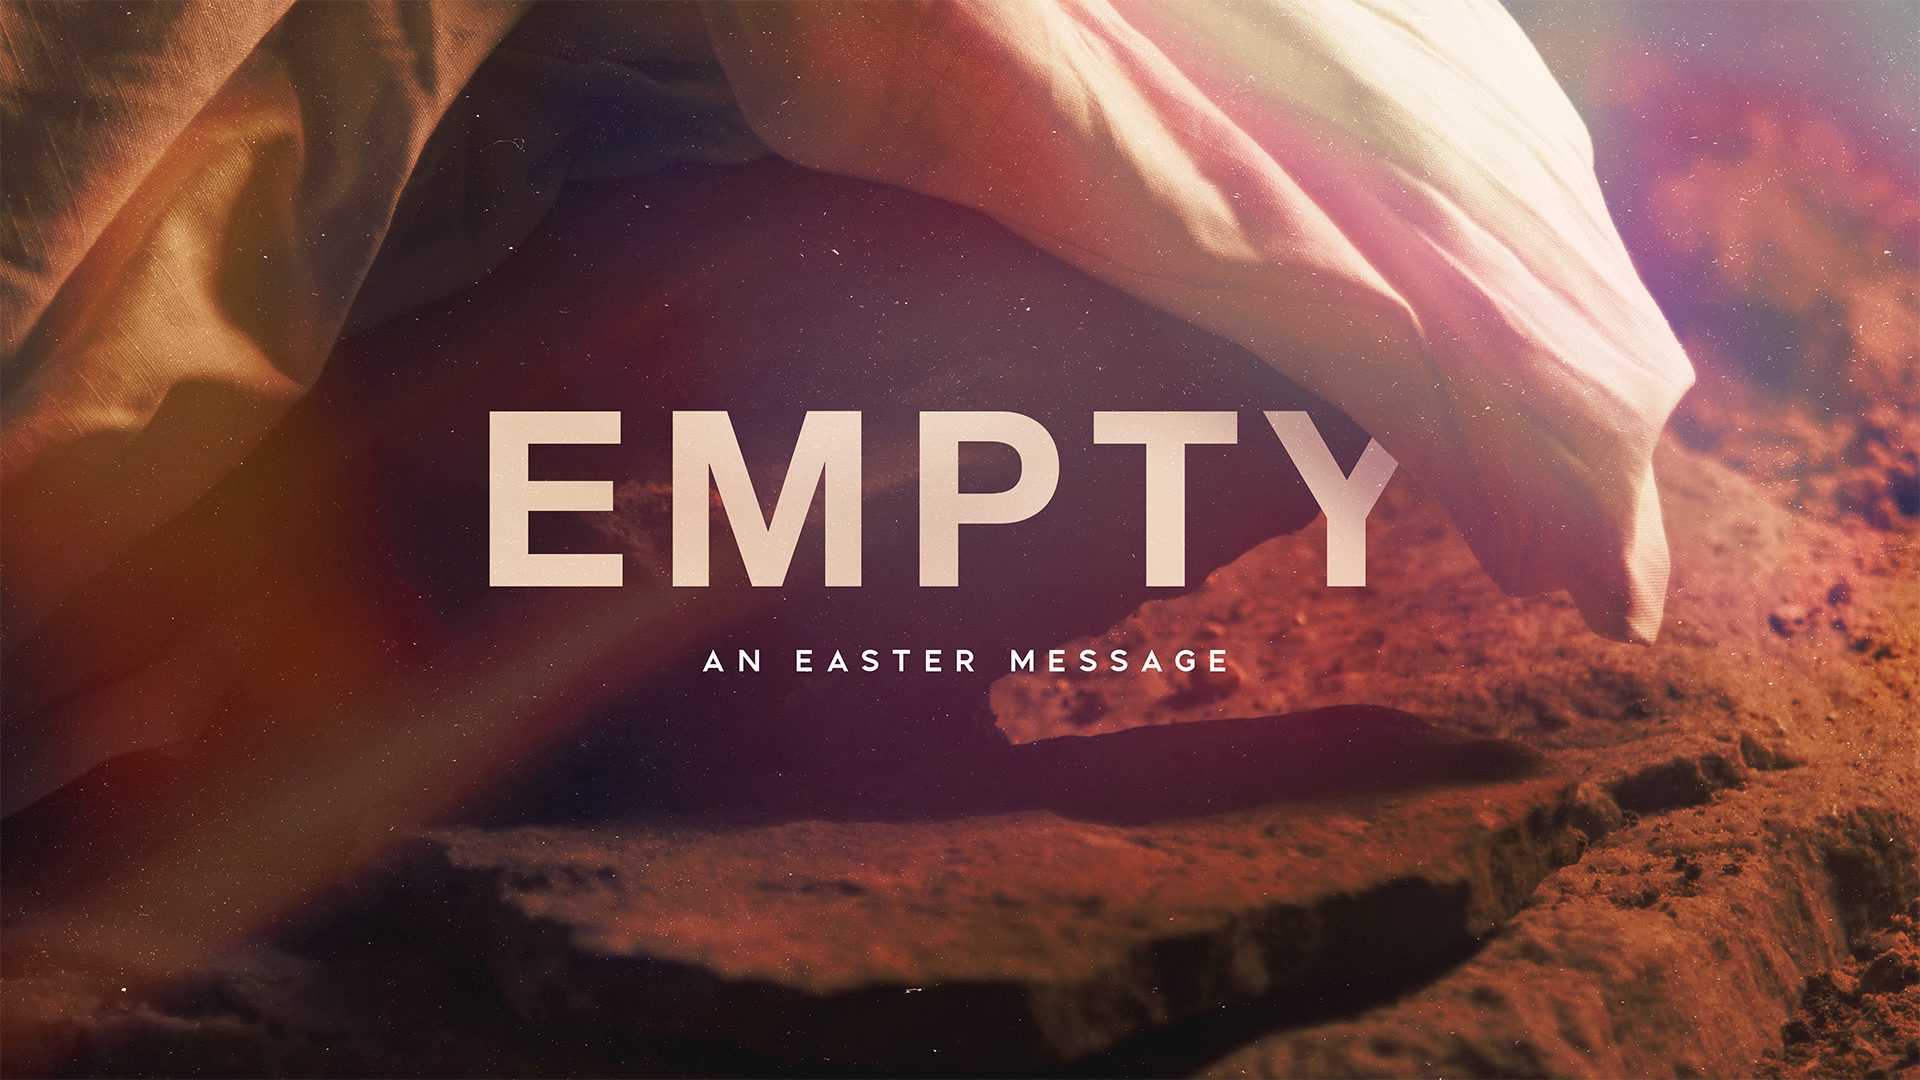 Sheet over rock, text "Empty An Easter Message"